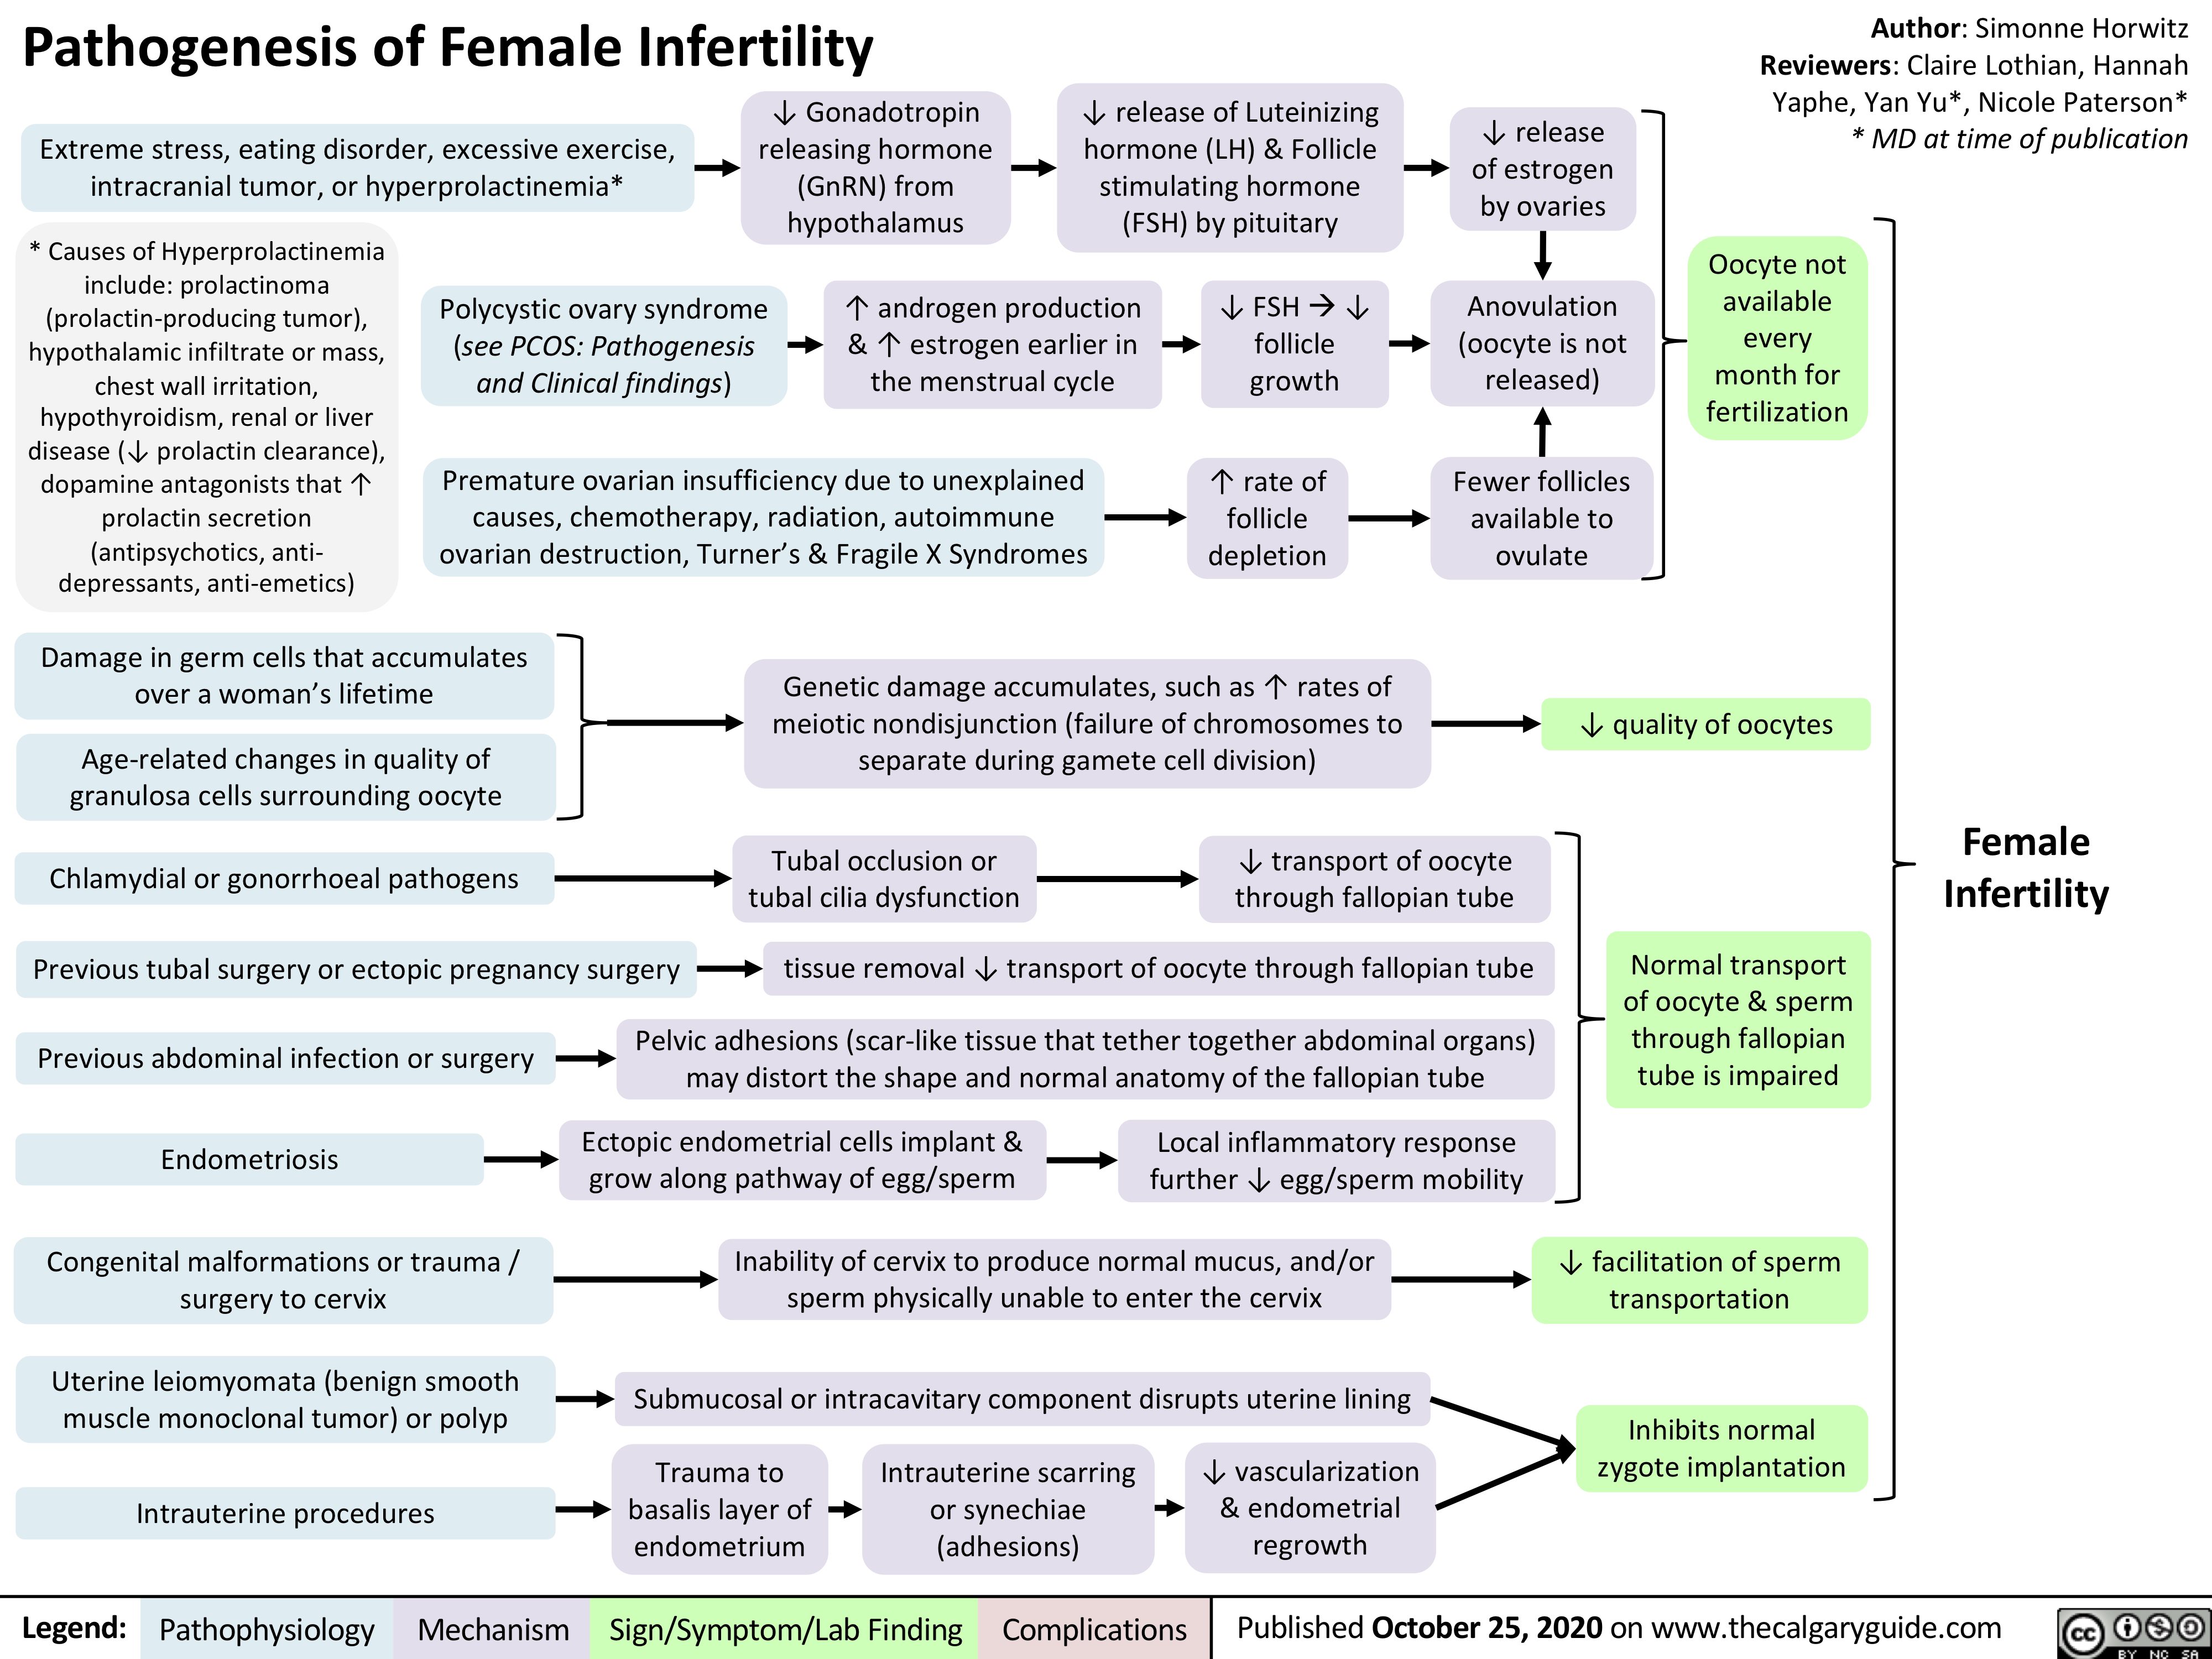 Pathogenesis Of Female Infertility Calgary Guide